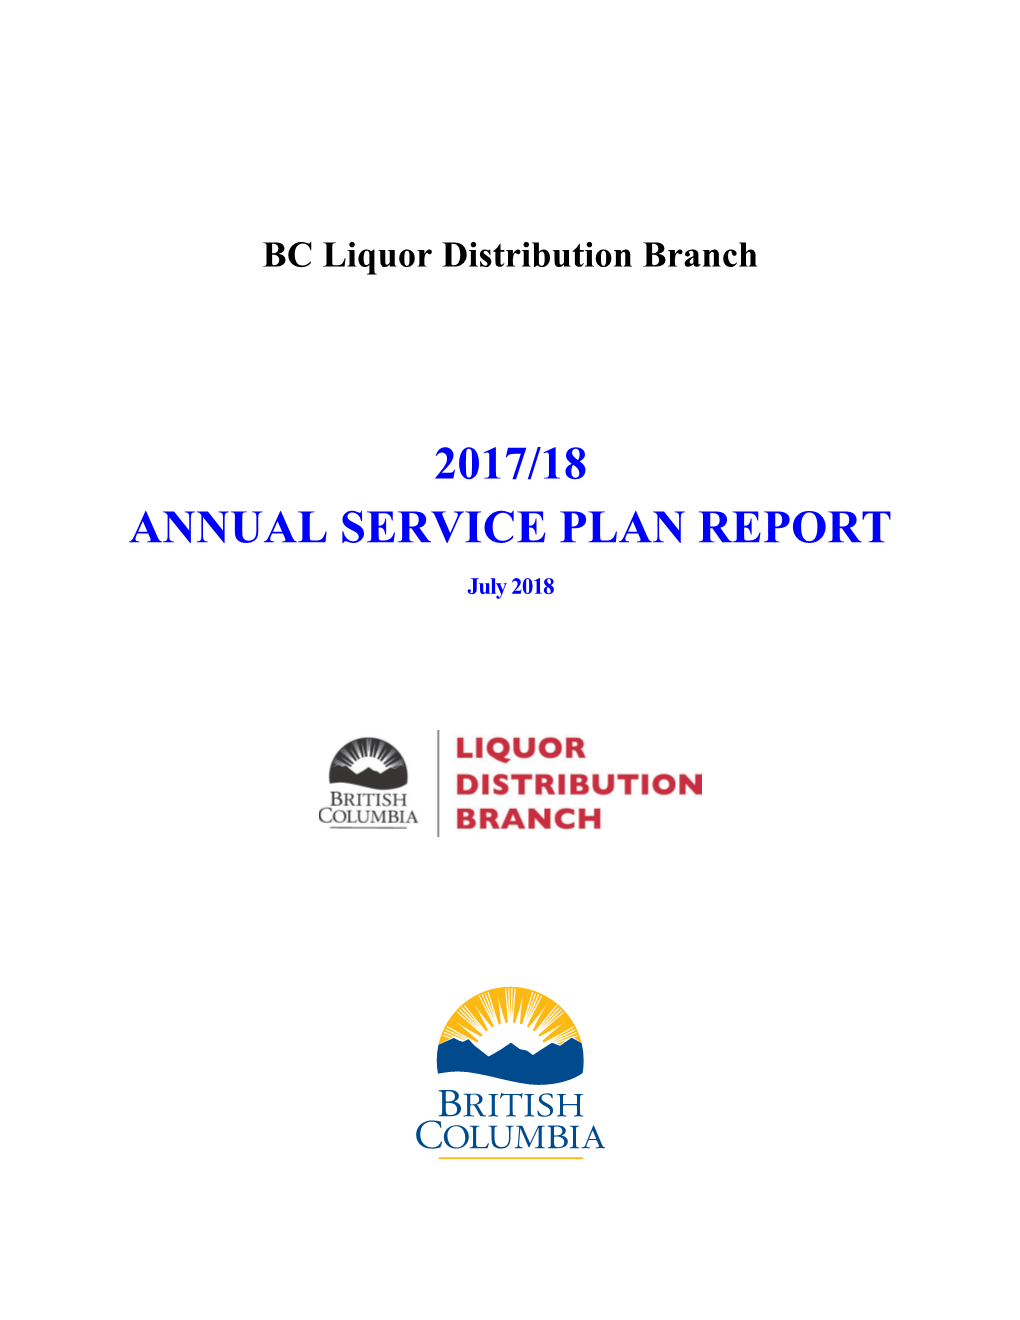 BC Liquor Distribution Branch 2017/18 Annual Service Plan Report